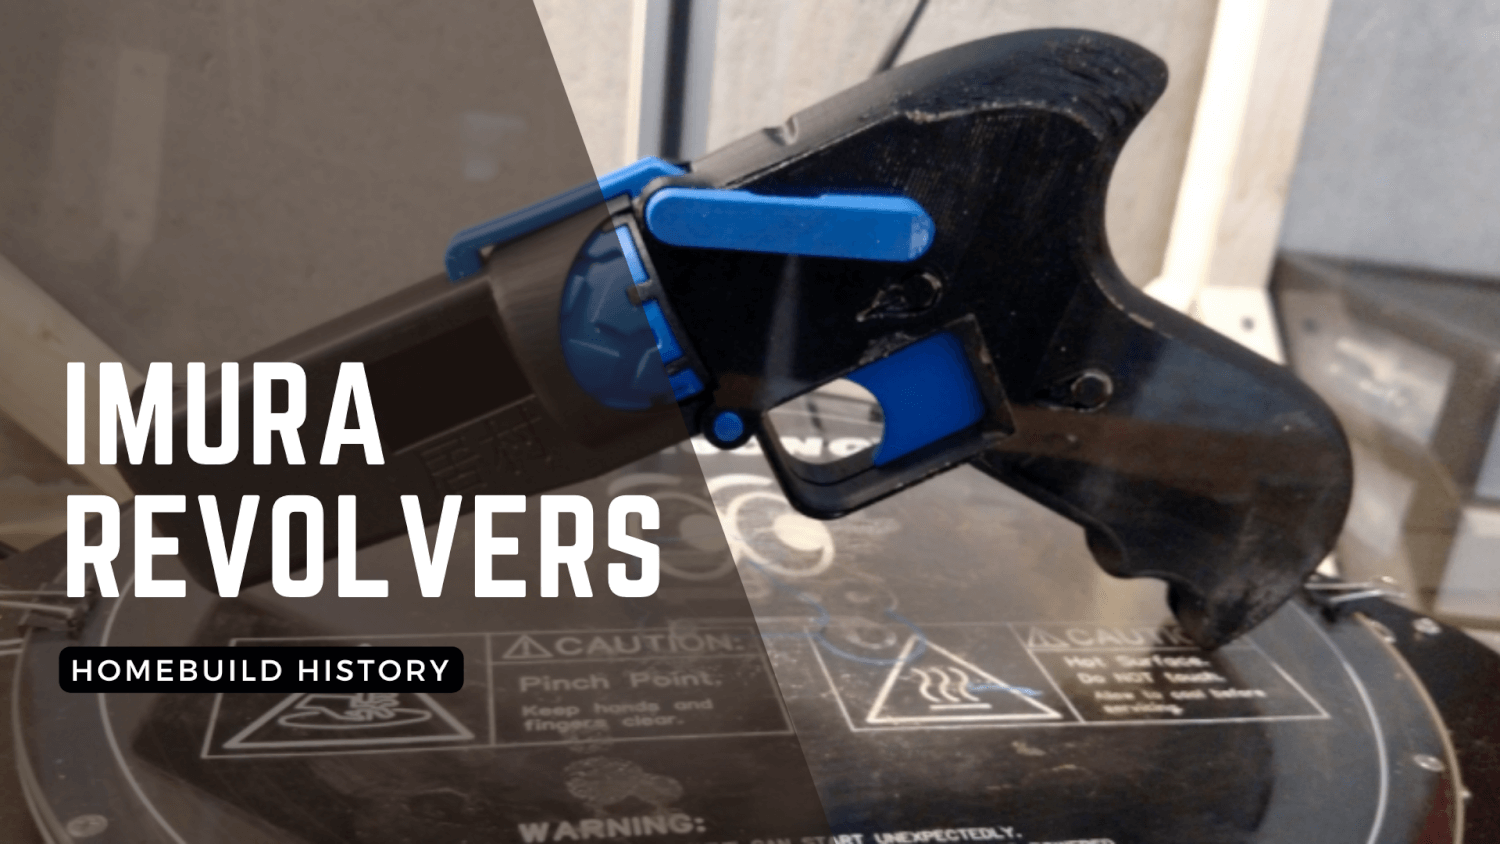 Homebuild History Imura Revolvers